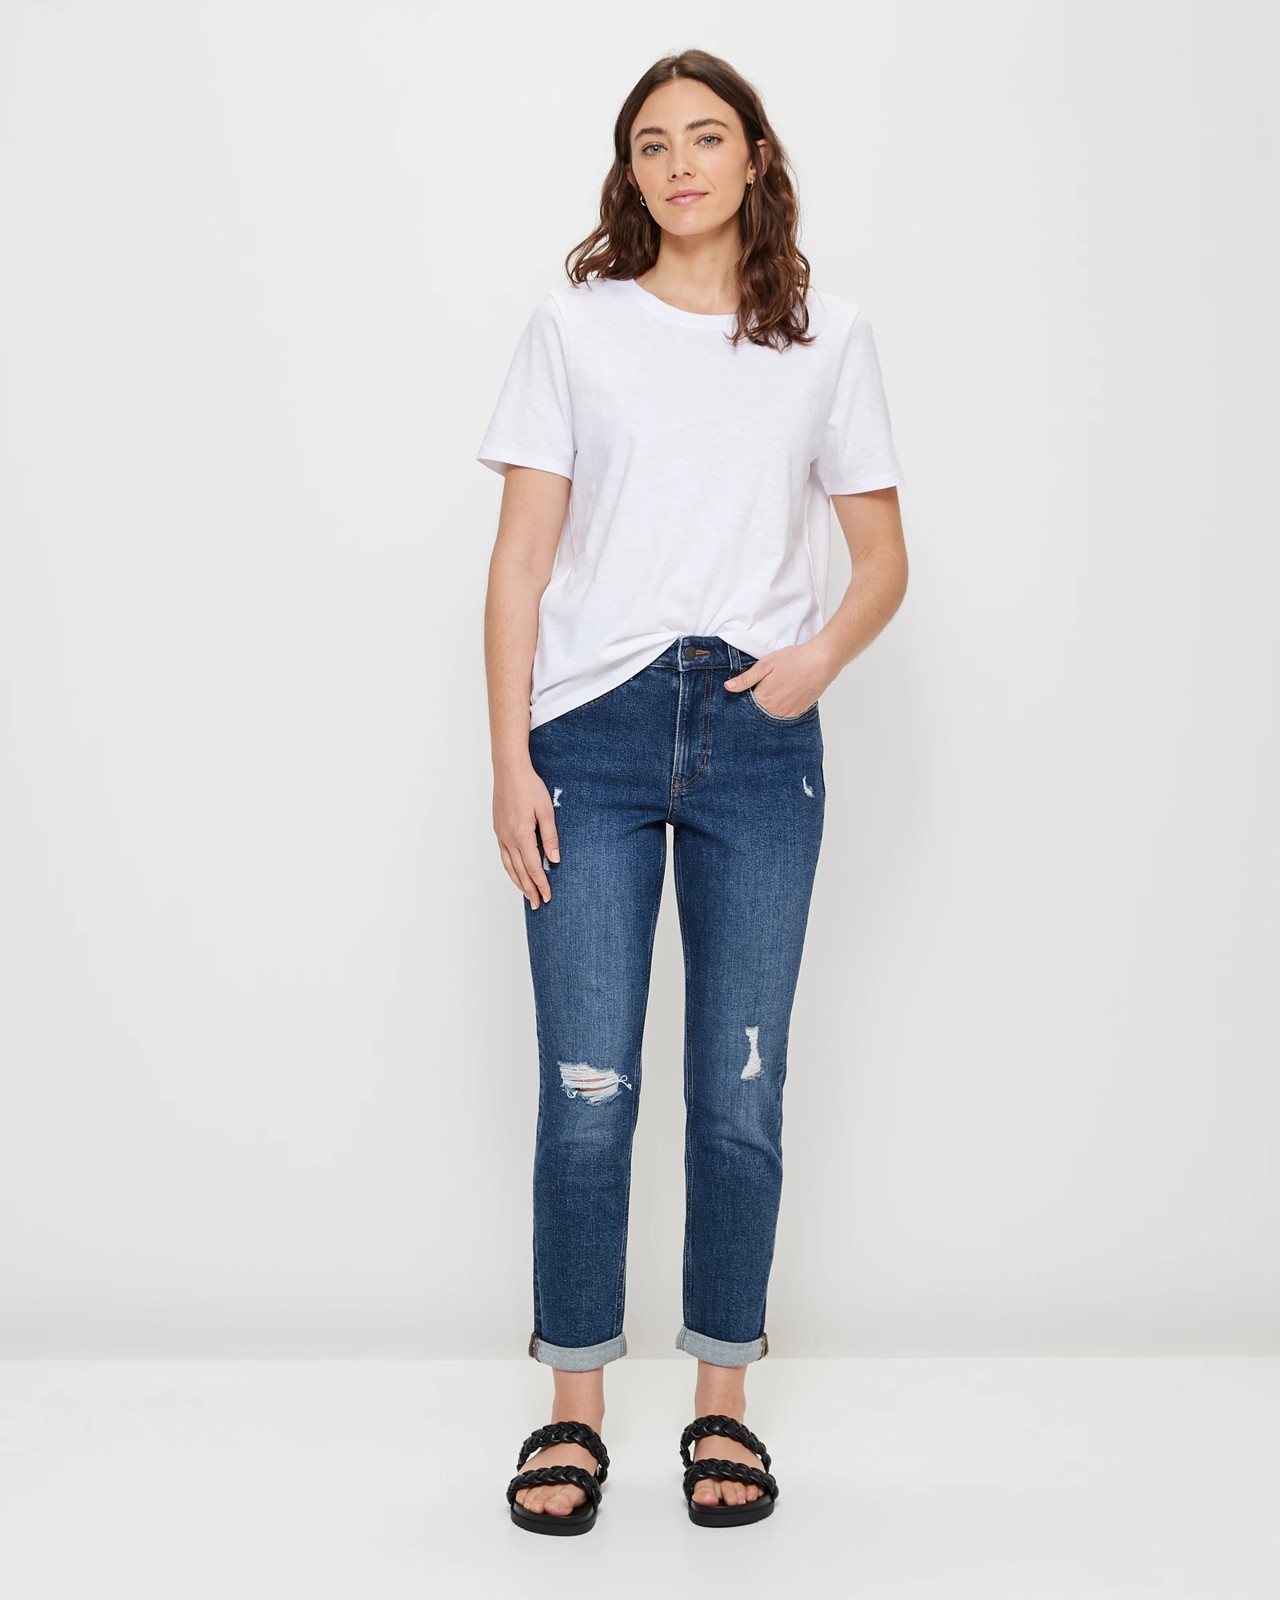 Tash Mid Rise Ankle Length Girlfriend Jeans | Target Australia